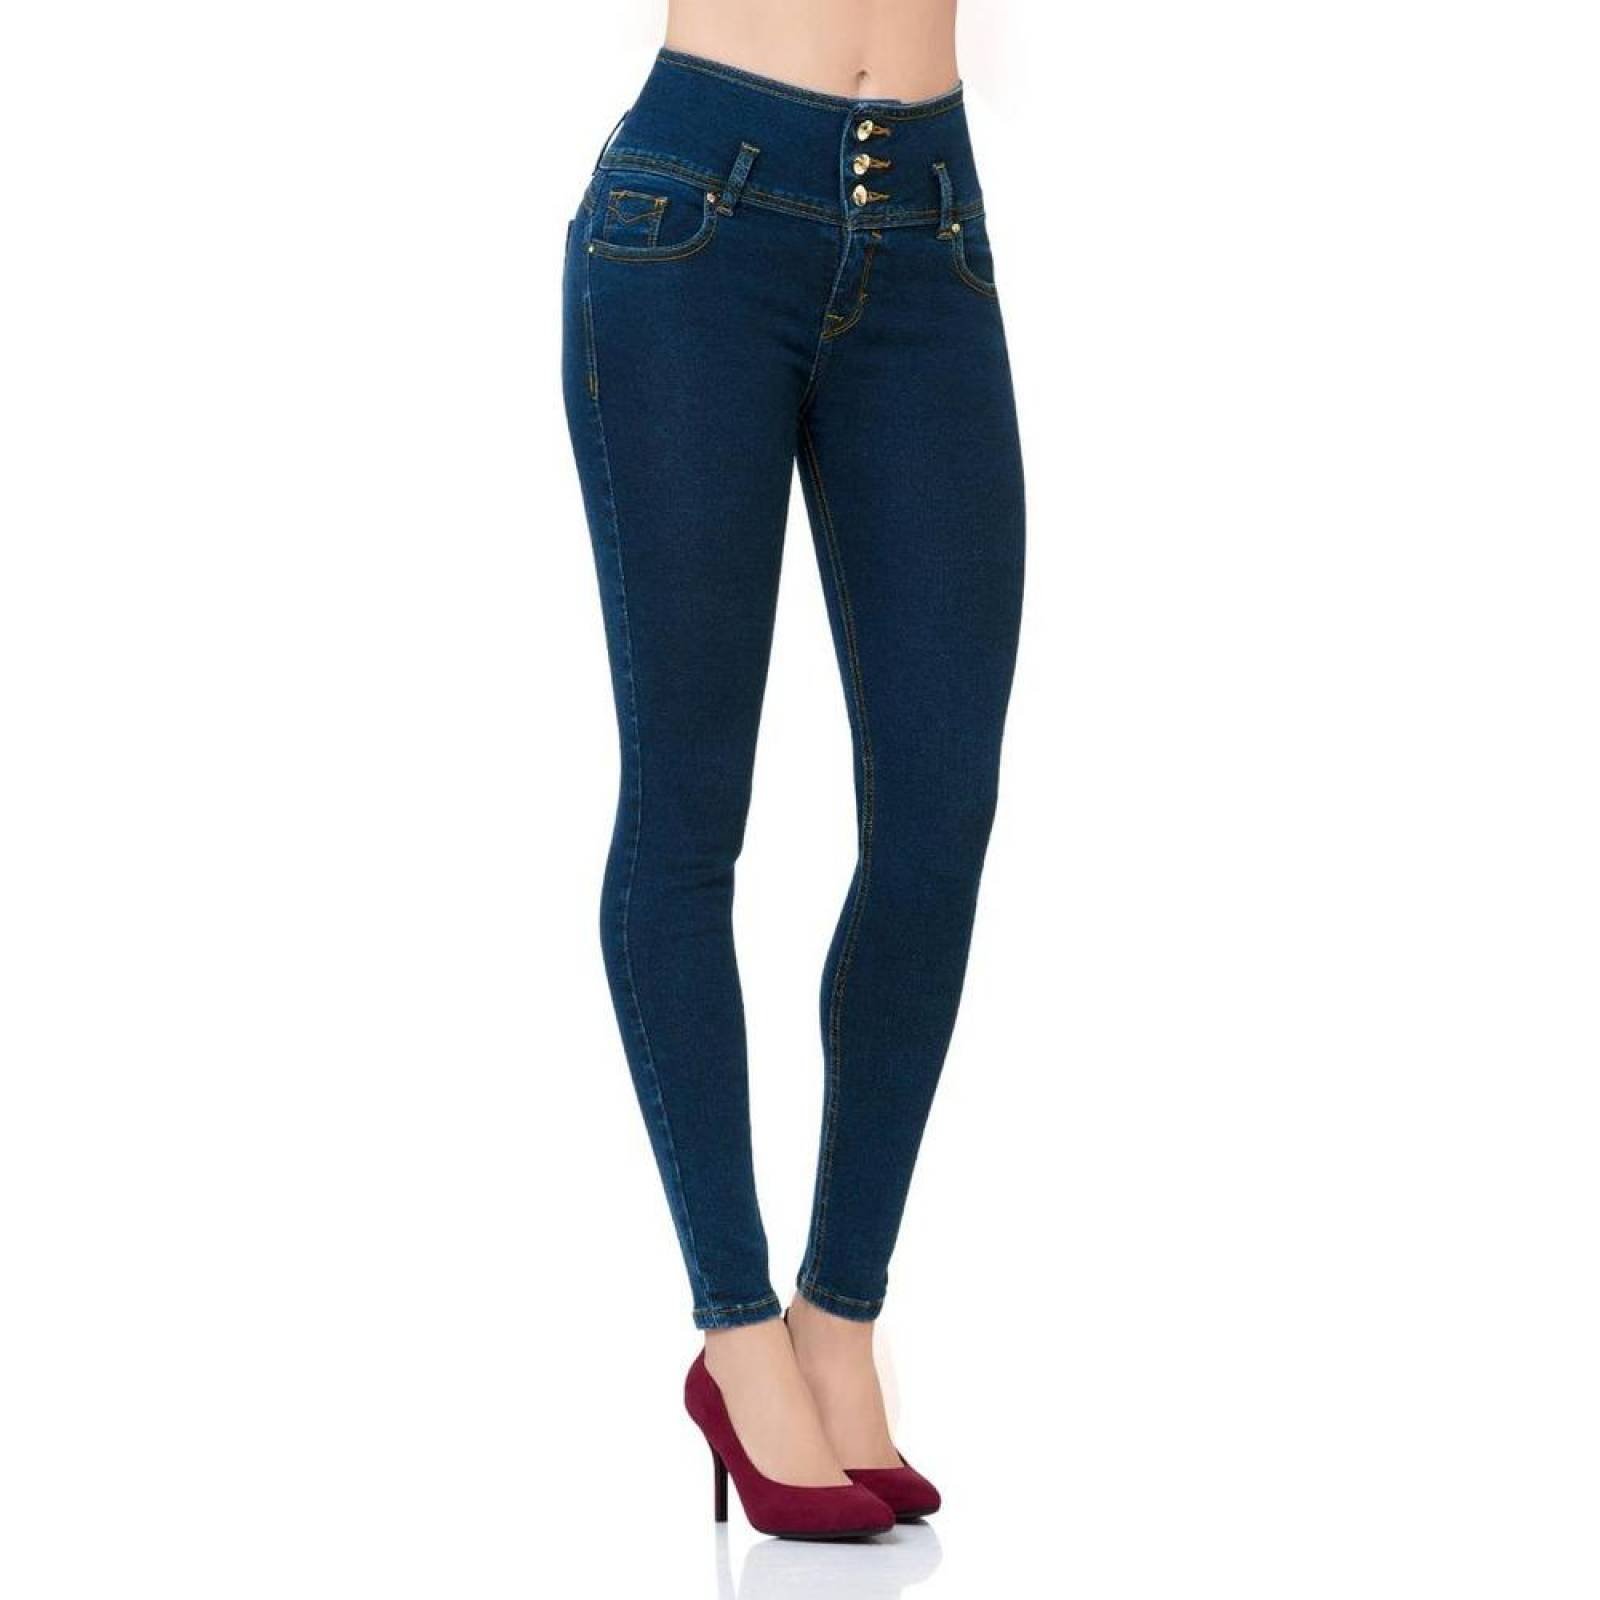 Jeans Básico Mujer Furor Stone 62105008 Mezclilla Stretch 